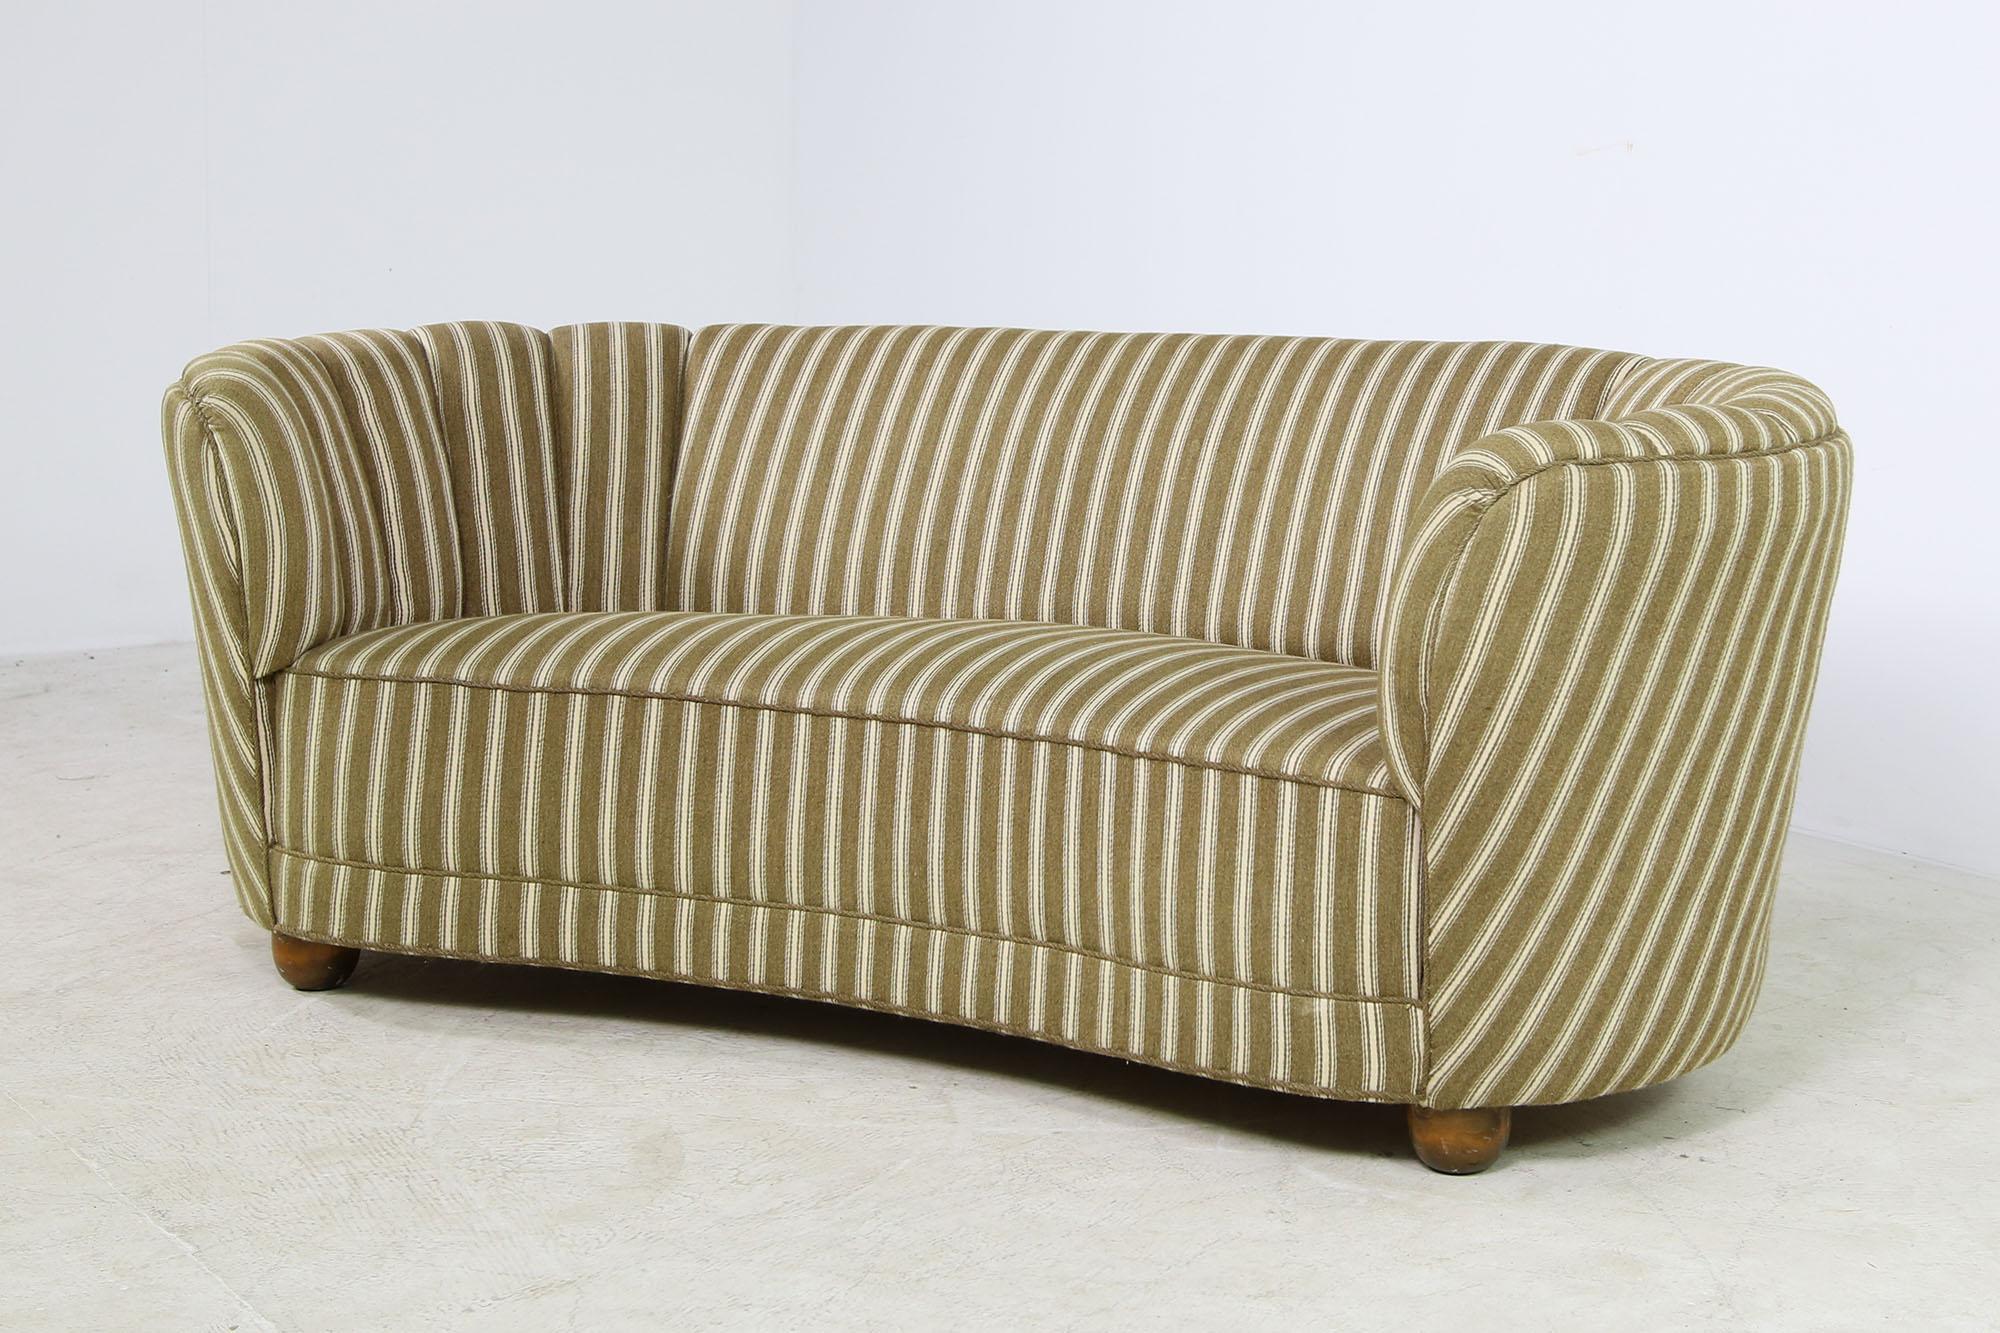 Mid-20th Century 1950s Danish Curved Striped Sofa, Mid Century Modern Design, Authentic Vintage